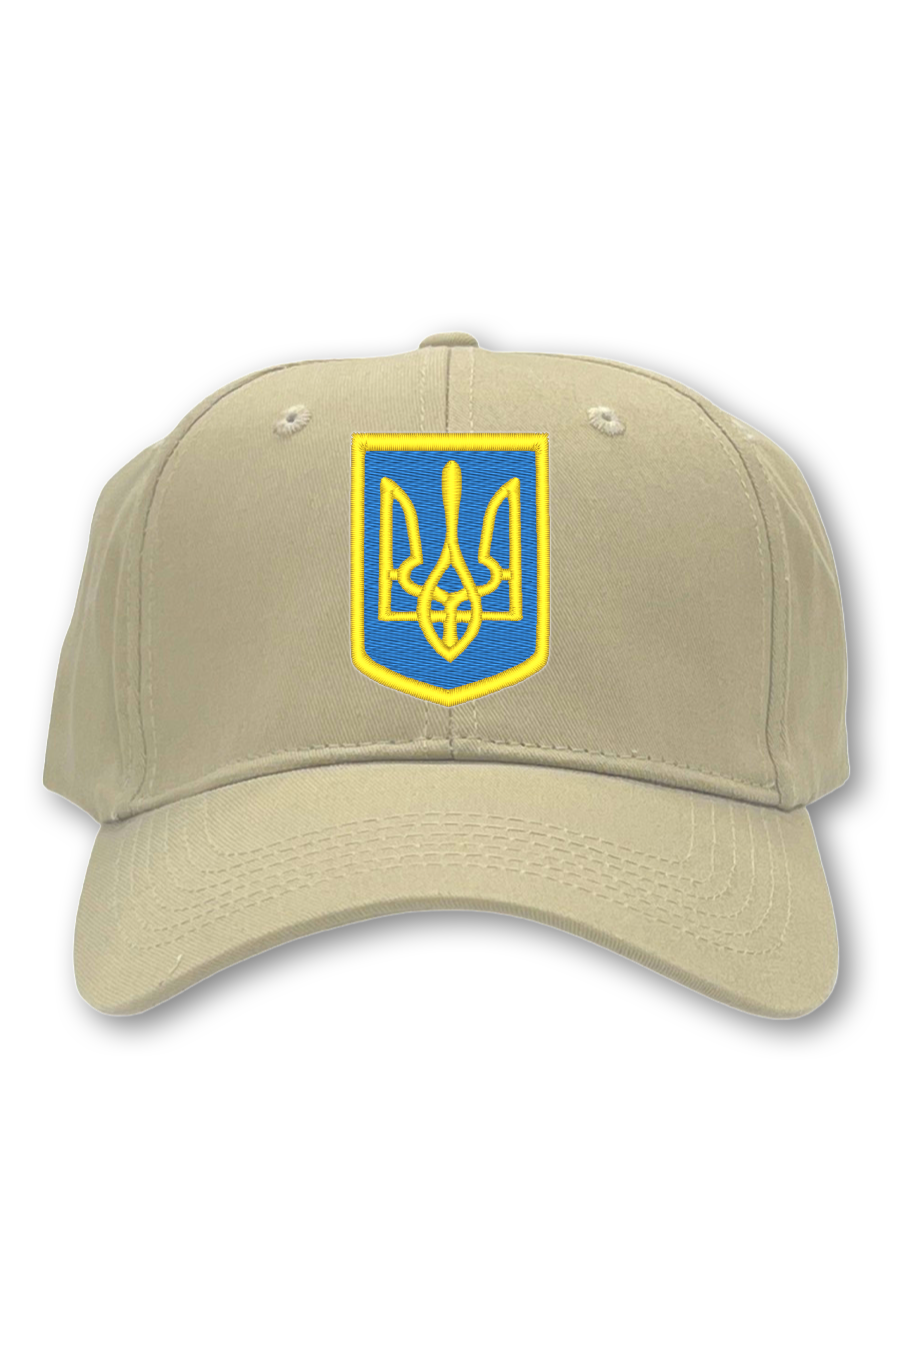 Baseball cap "Ukraine"